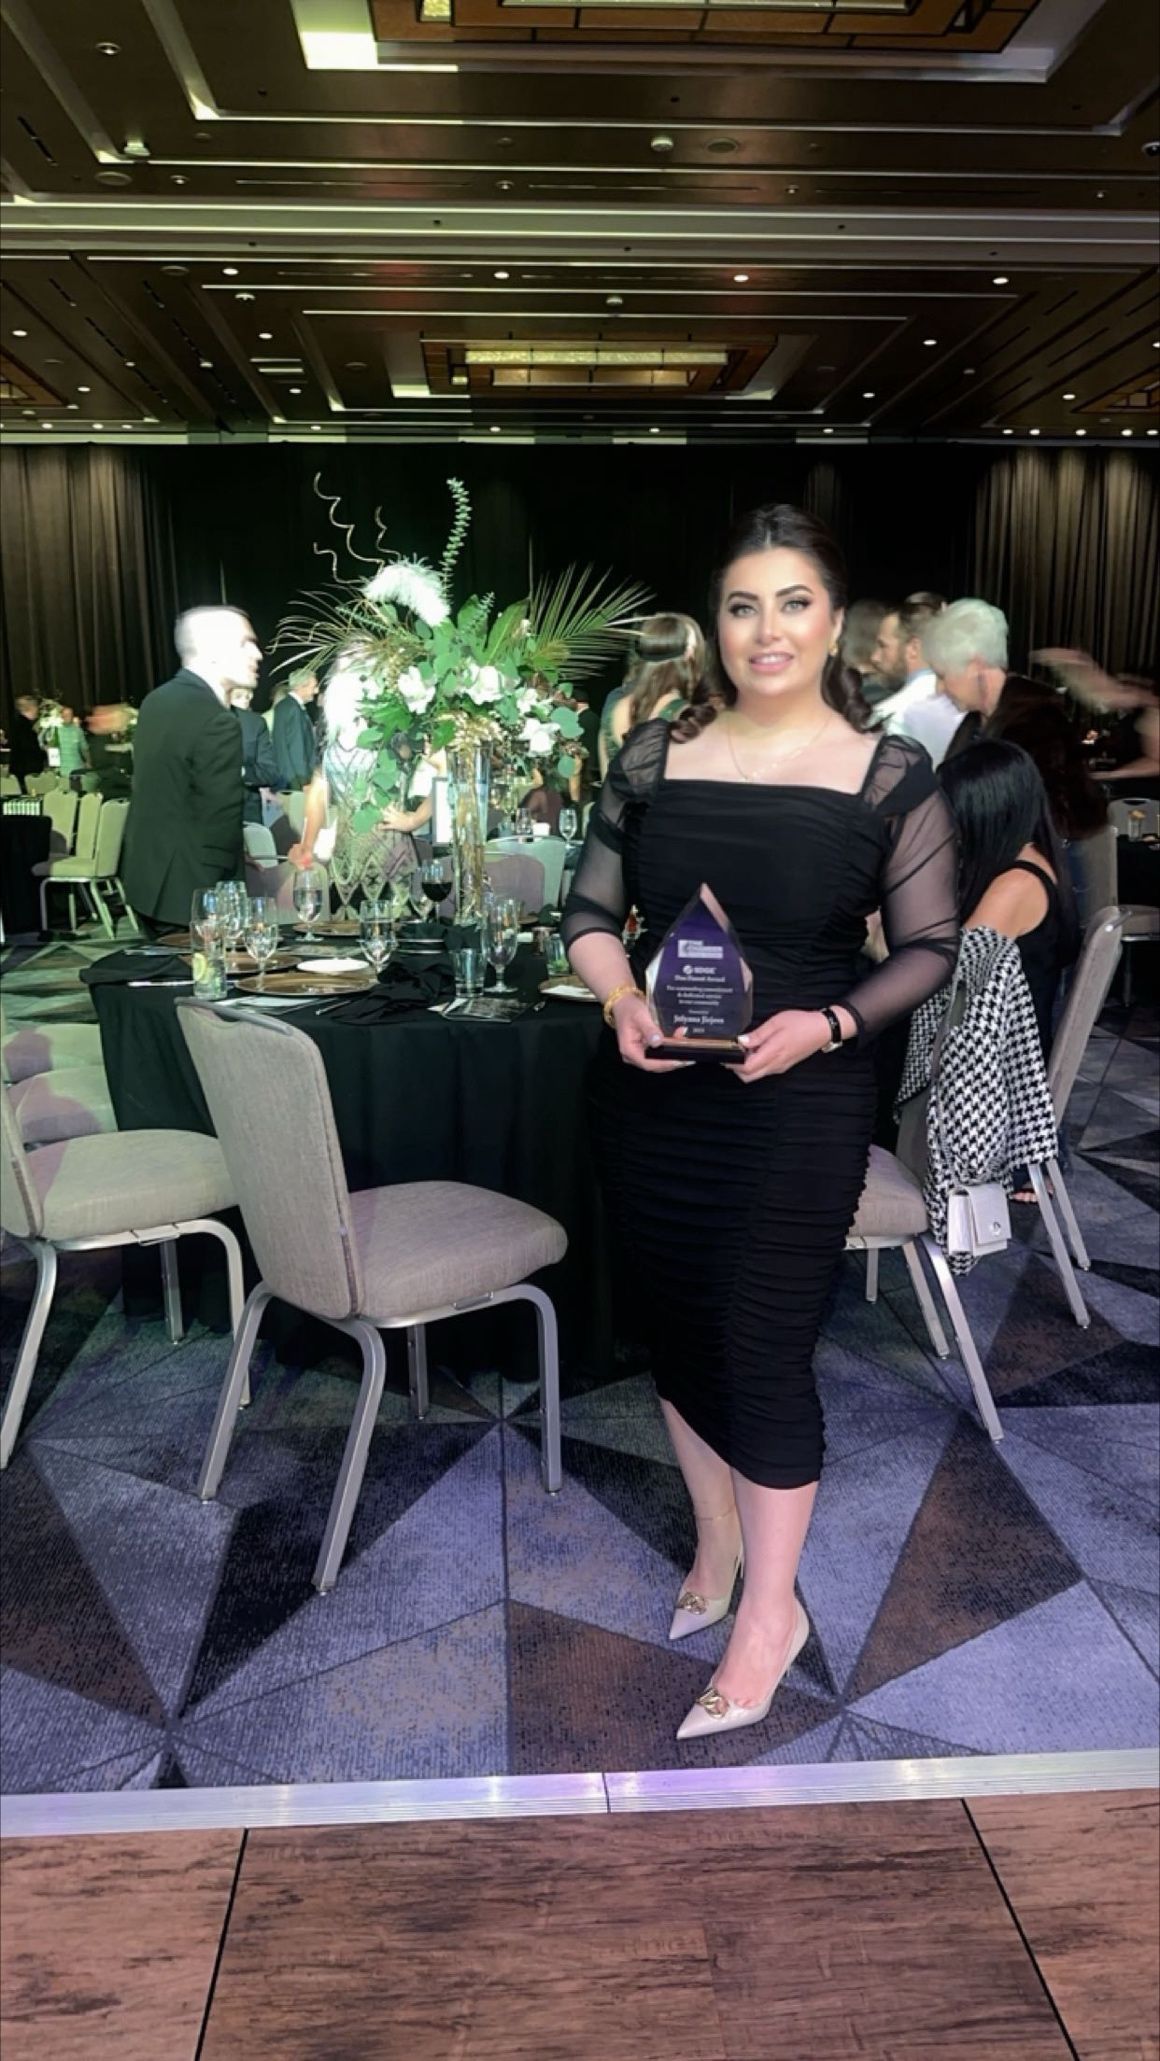 Jolyana Jirjees of San Diego organization Chaldean Community Council holding an award